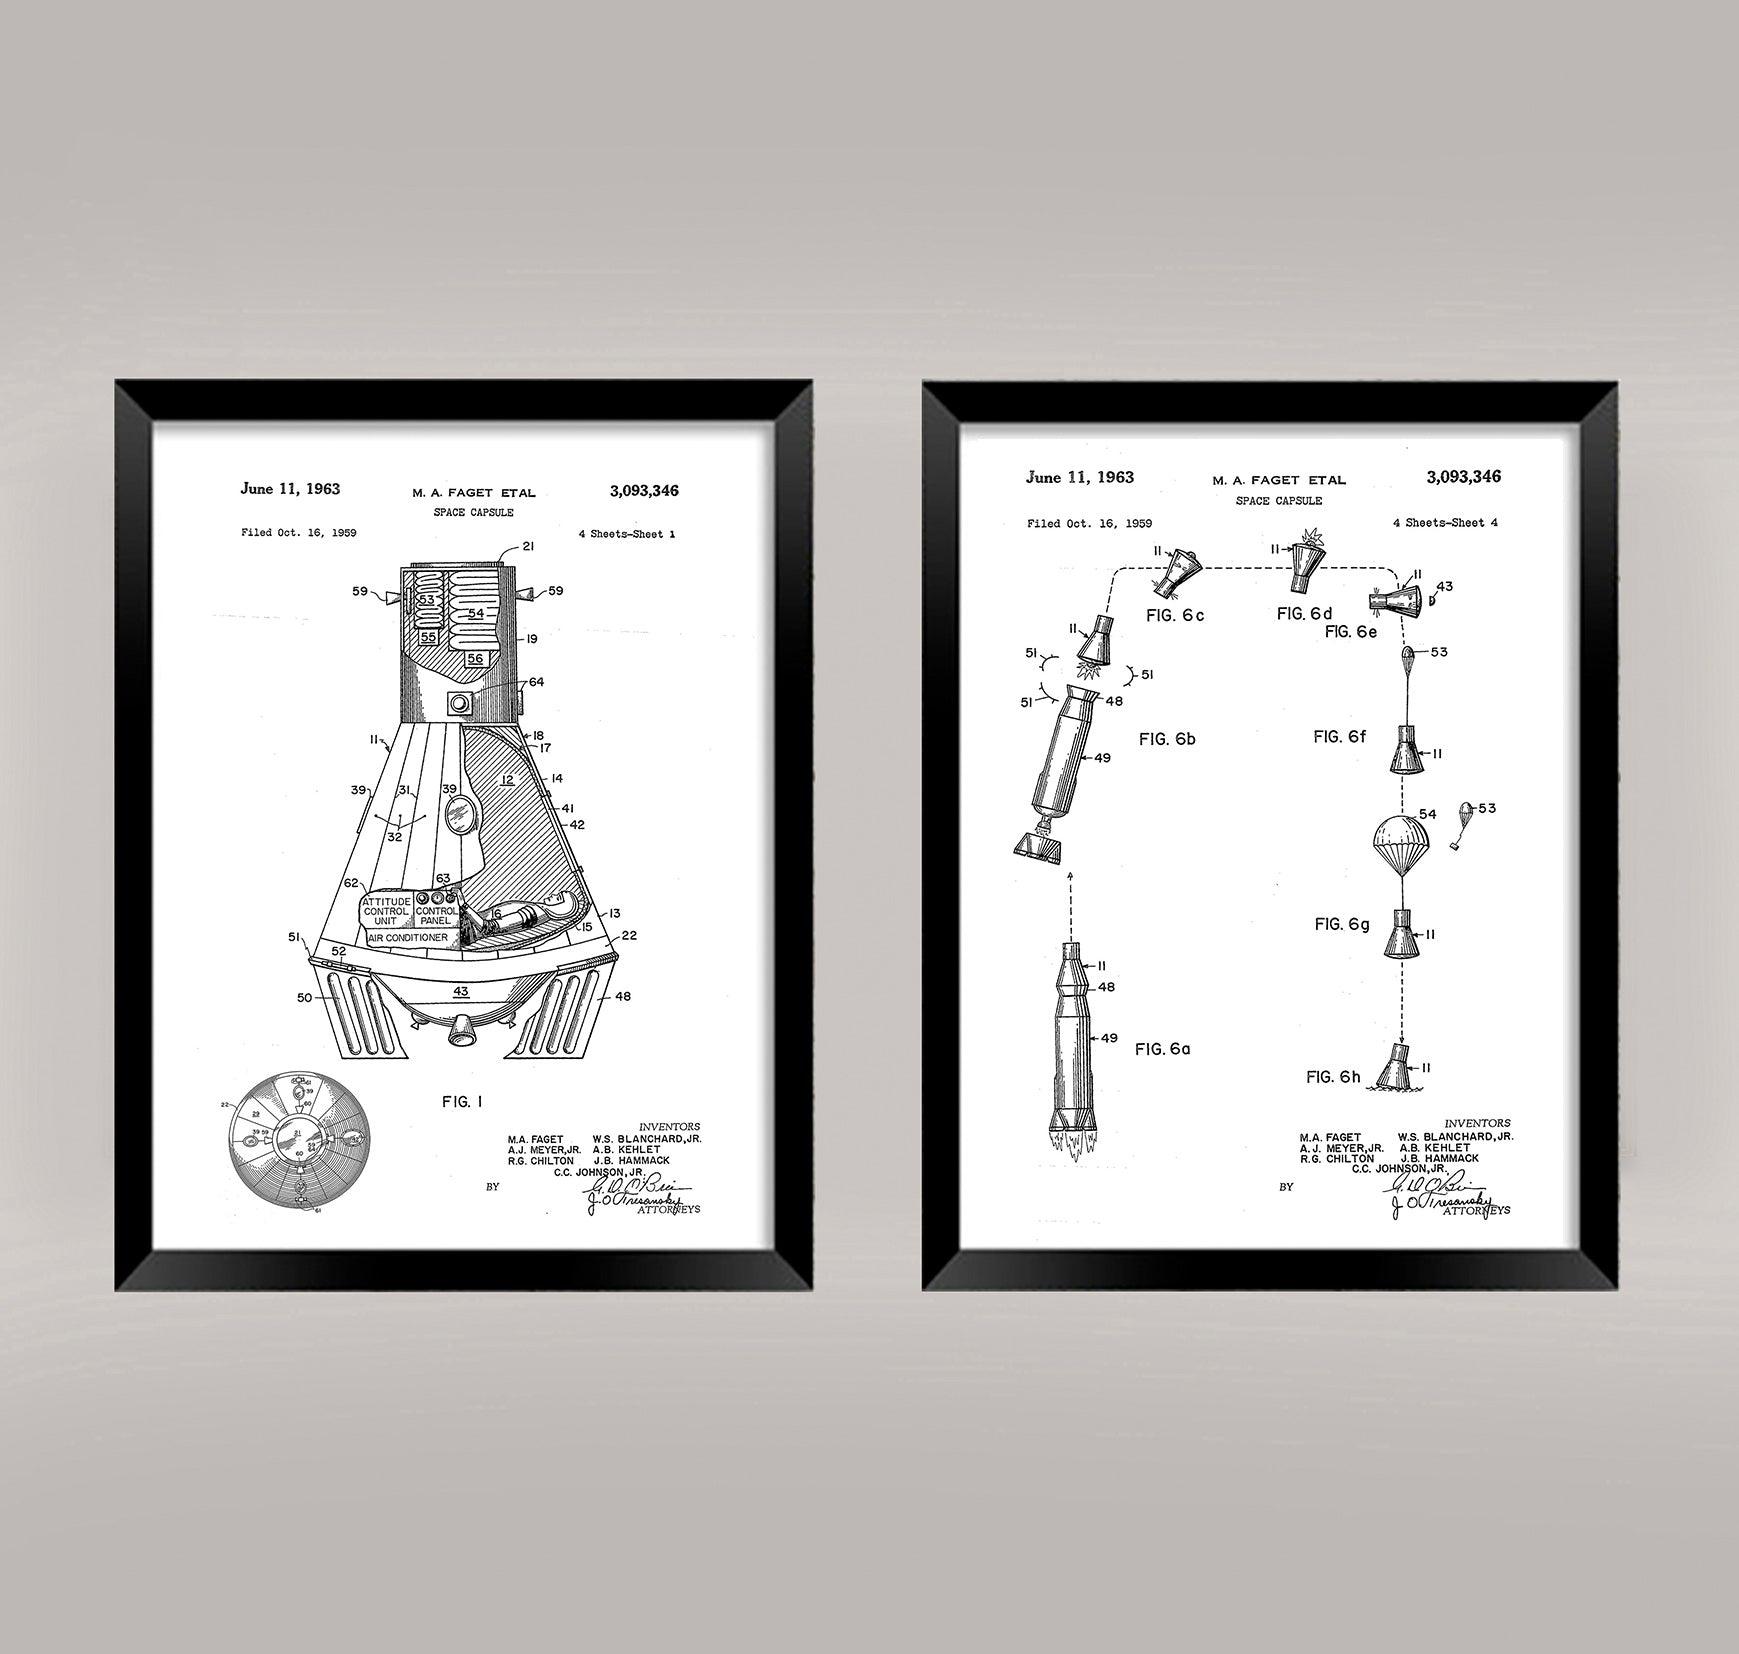 SPACE CAPSULE PRINTS: Patent Blueprint Artwork - Pimlico Prints